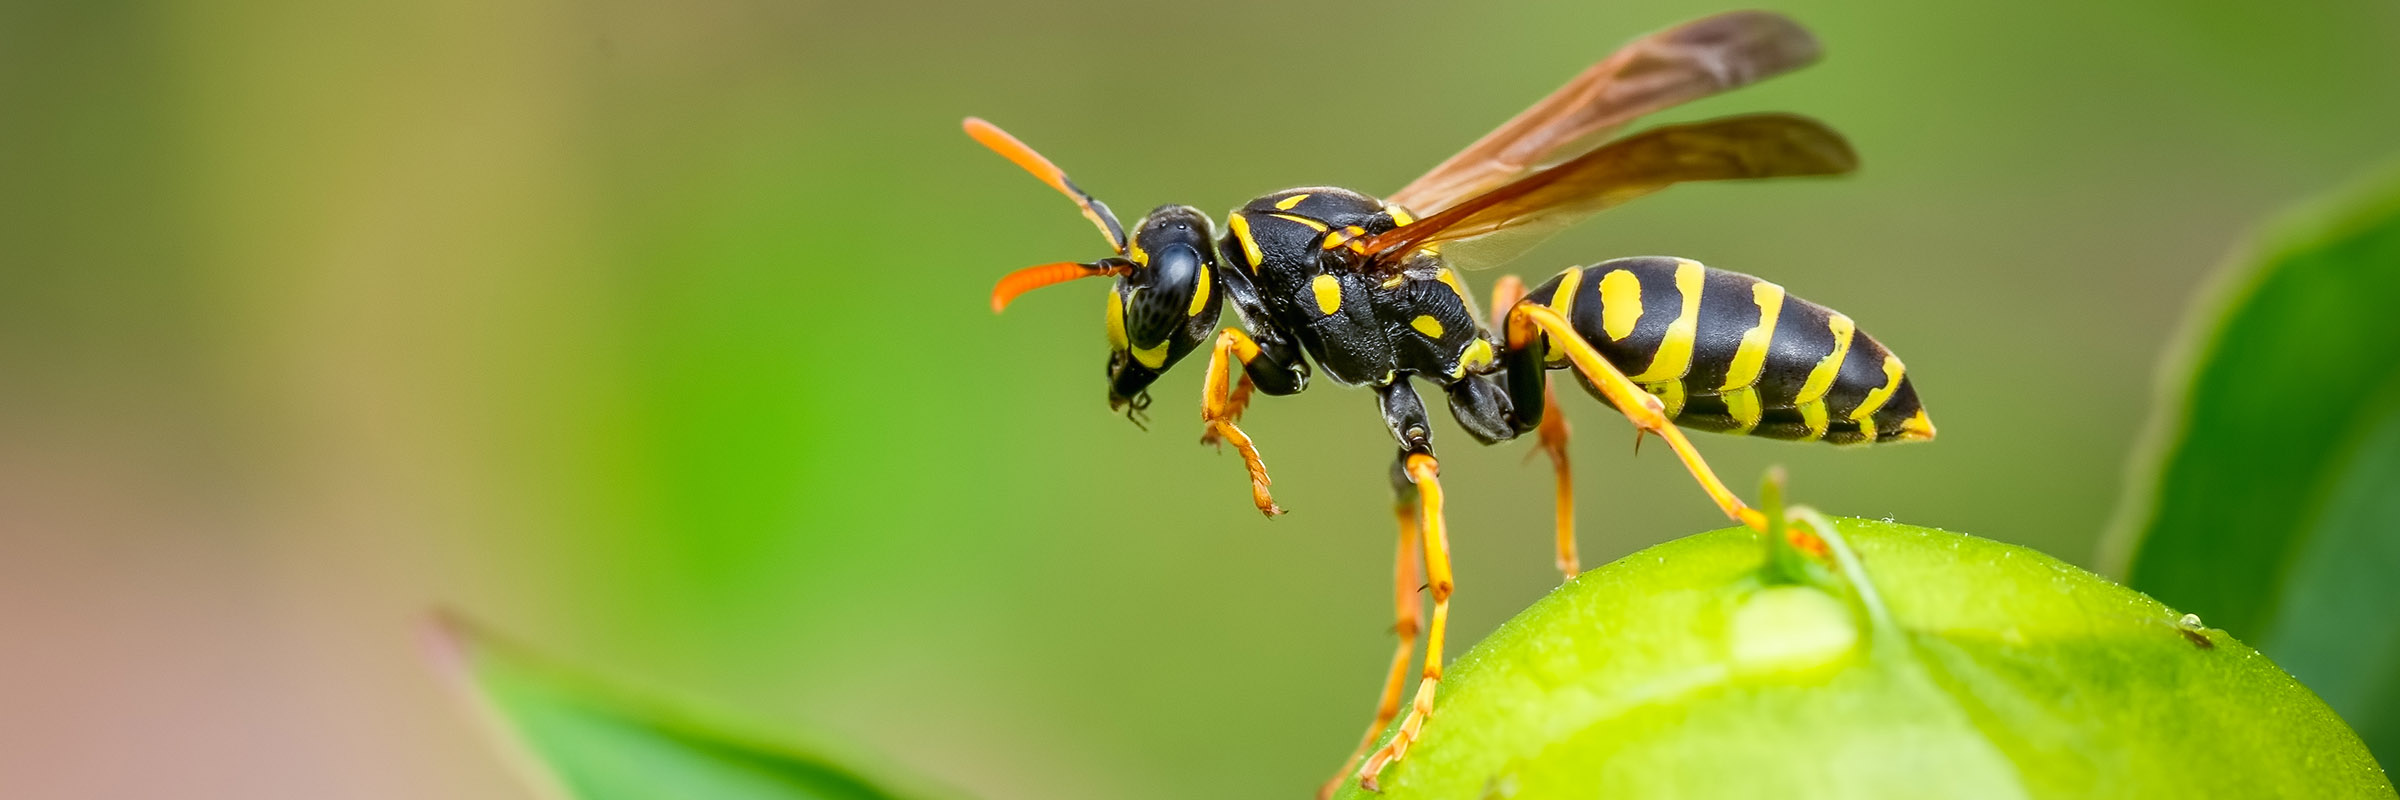 Wasp c